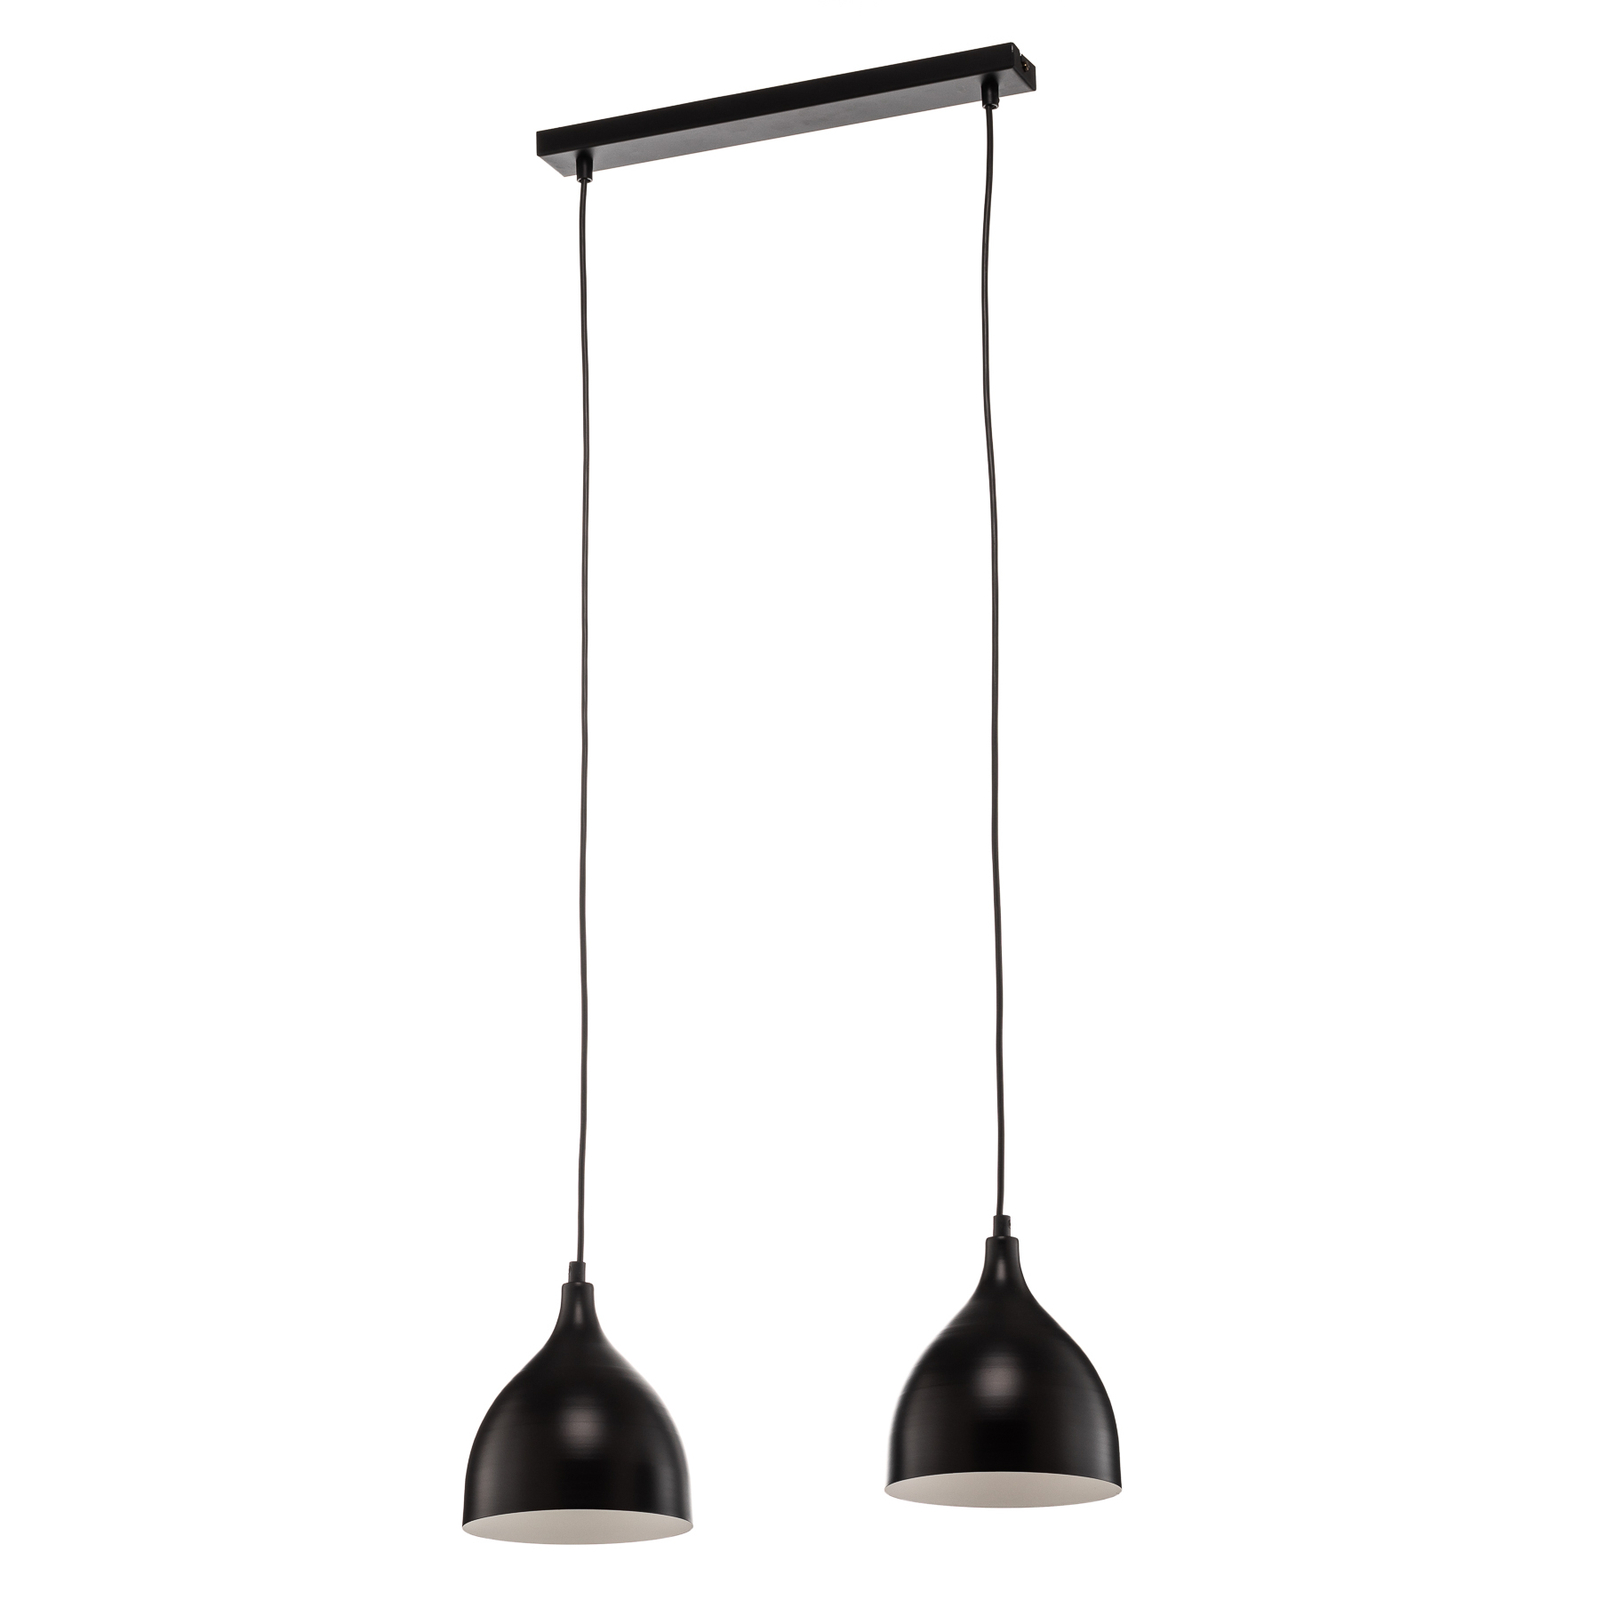 Nanu metalen hanglamp, zwart, 2-lamps